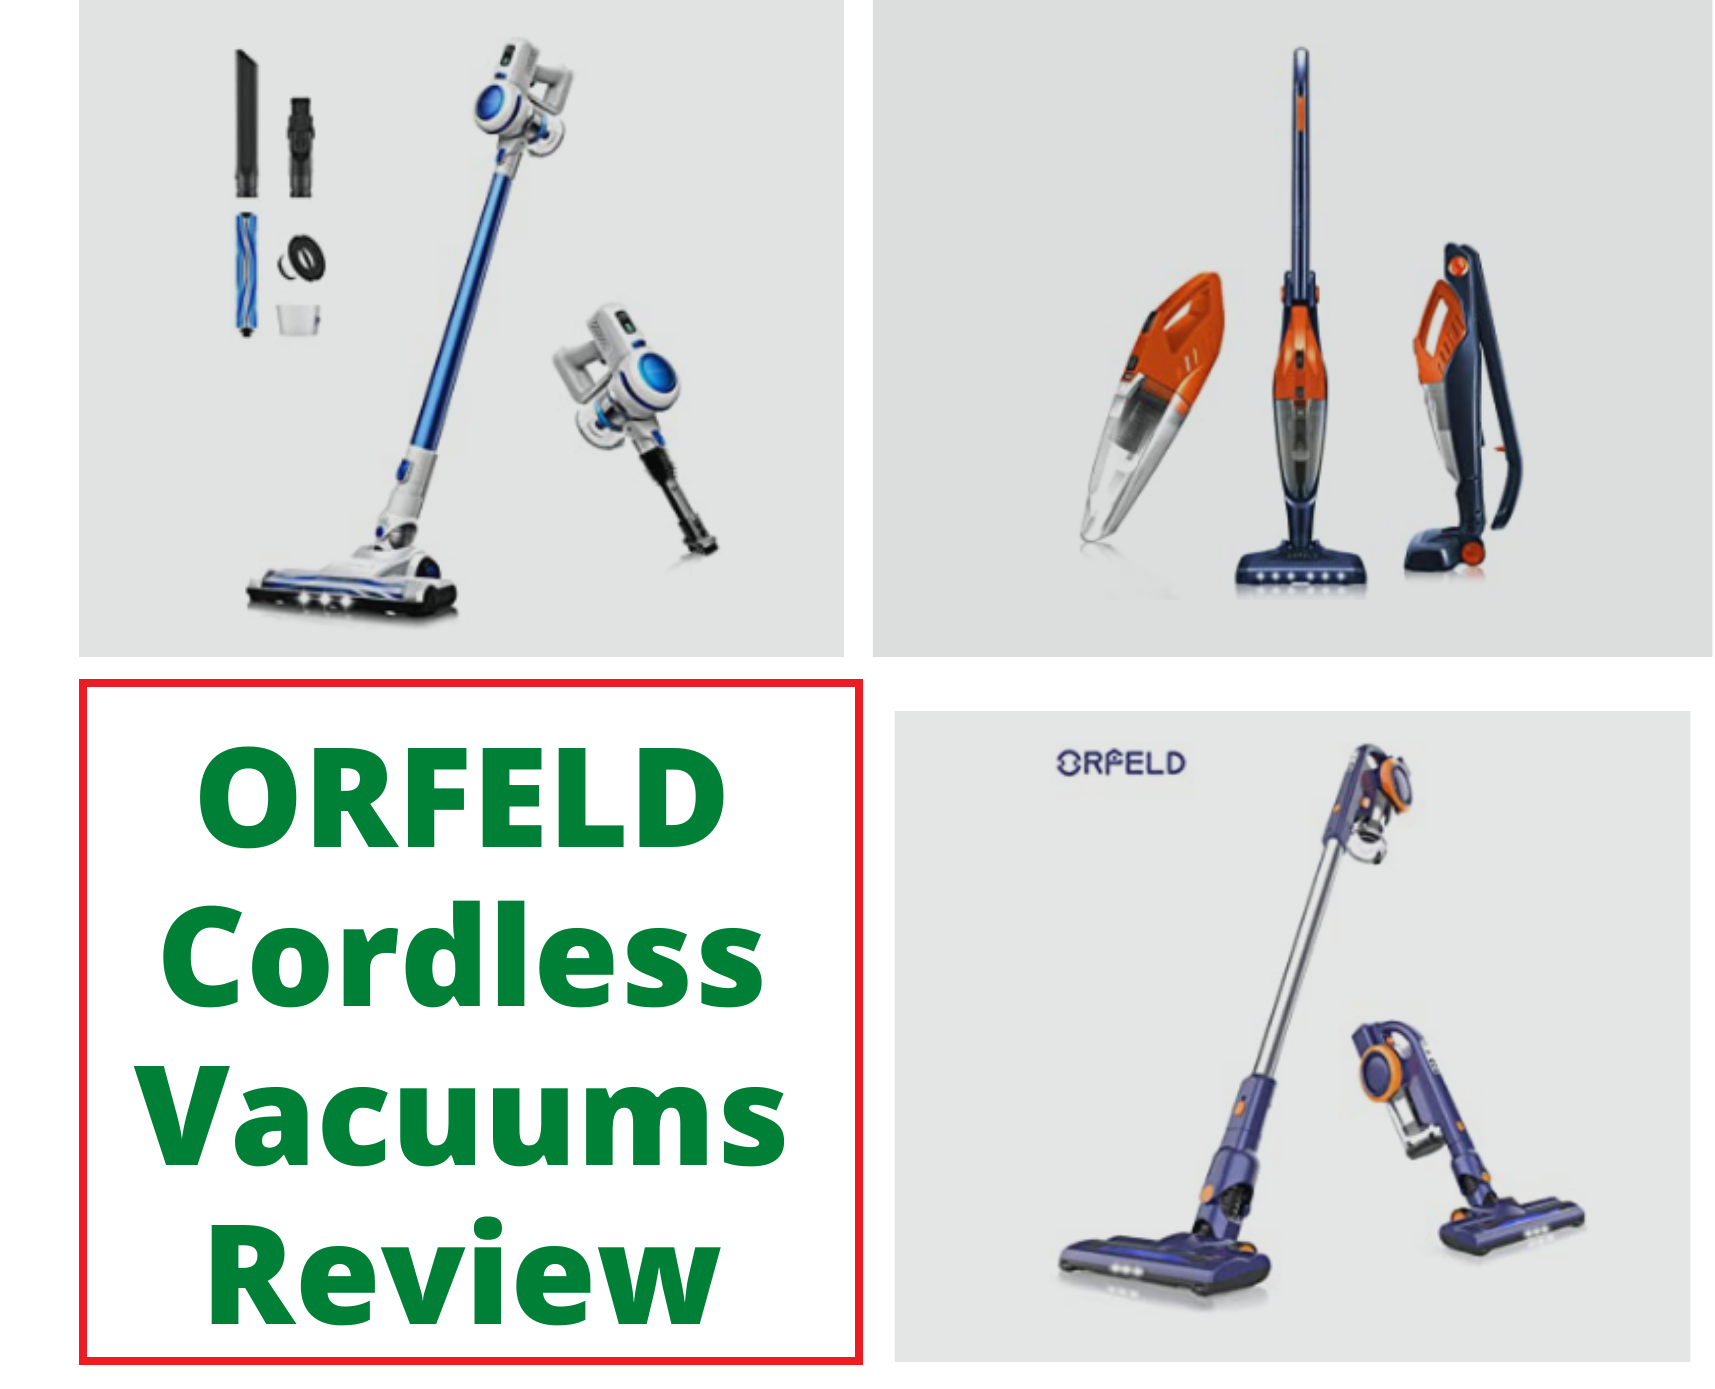 ORFELD Cordless Vacuums